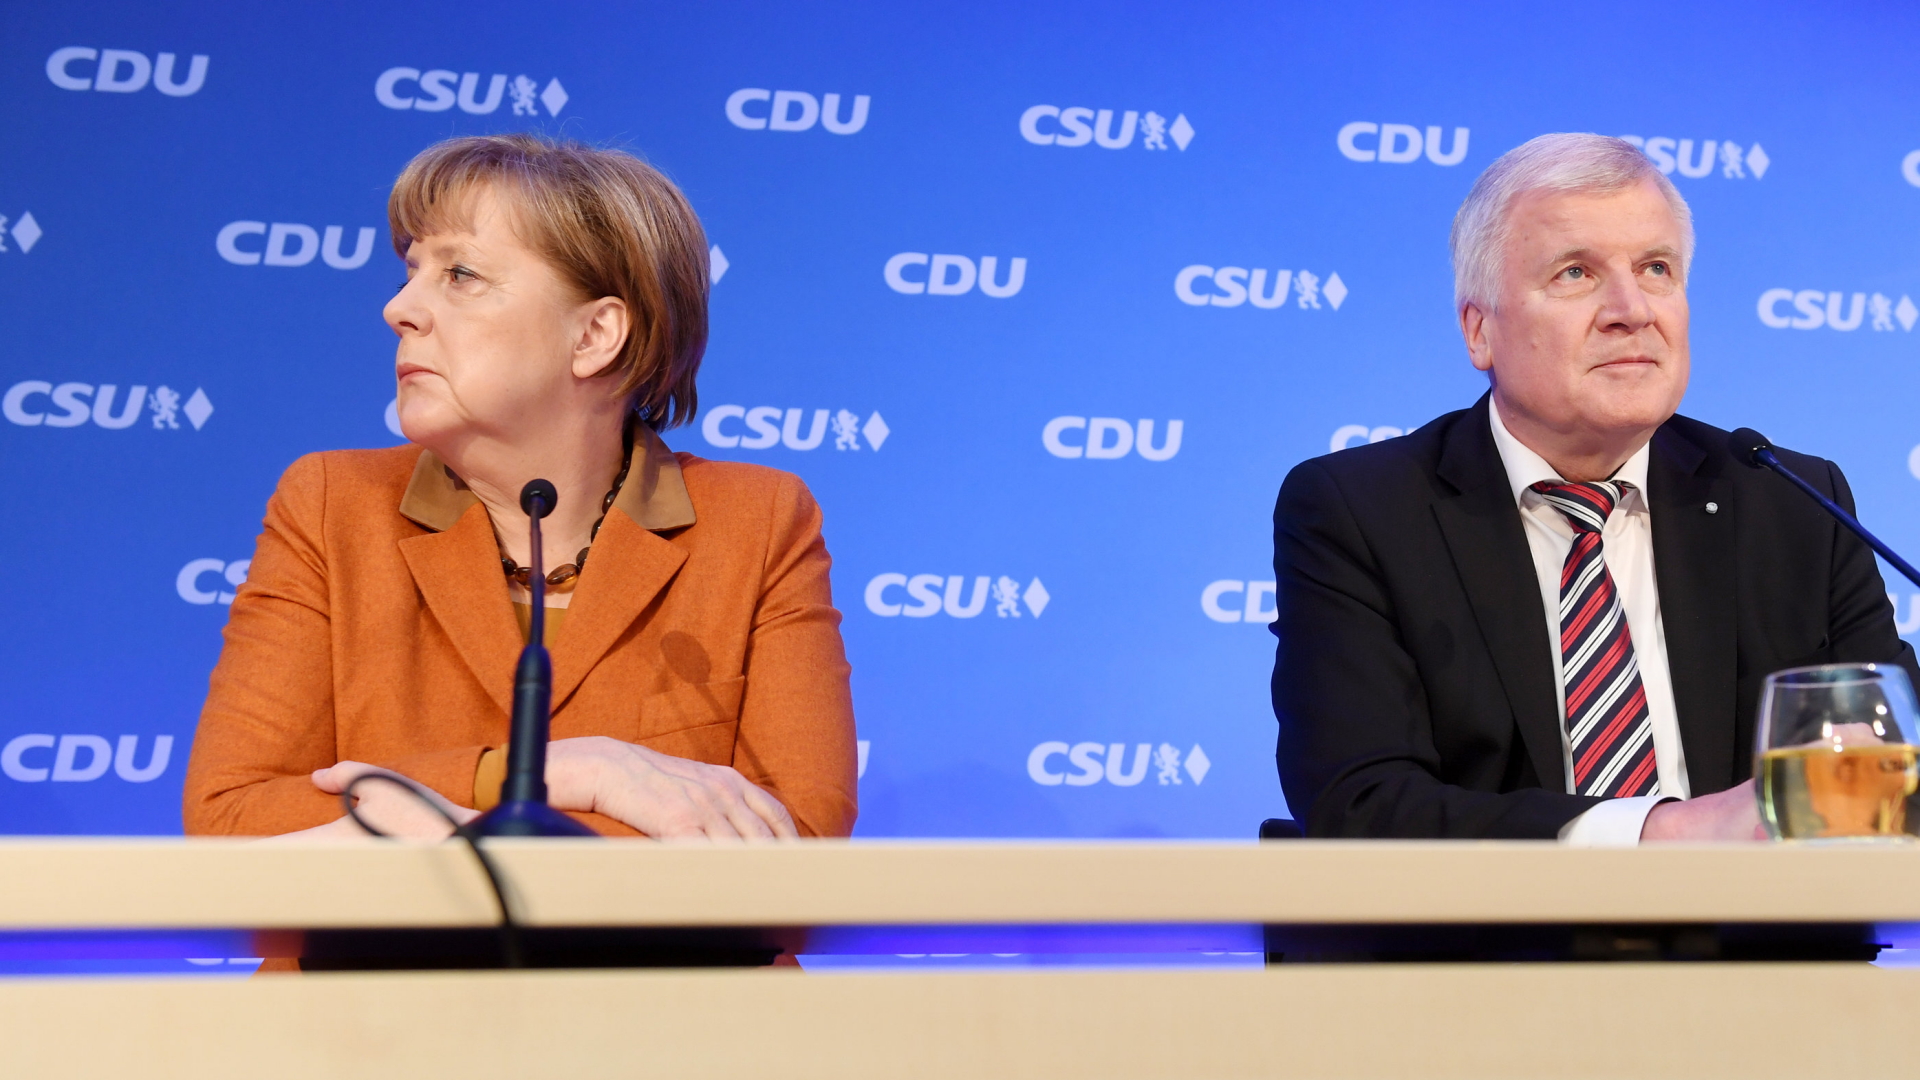 Angela Merkel und Horst Seehofer | dpa